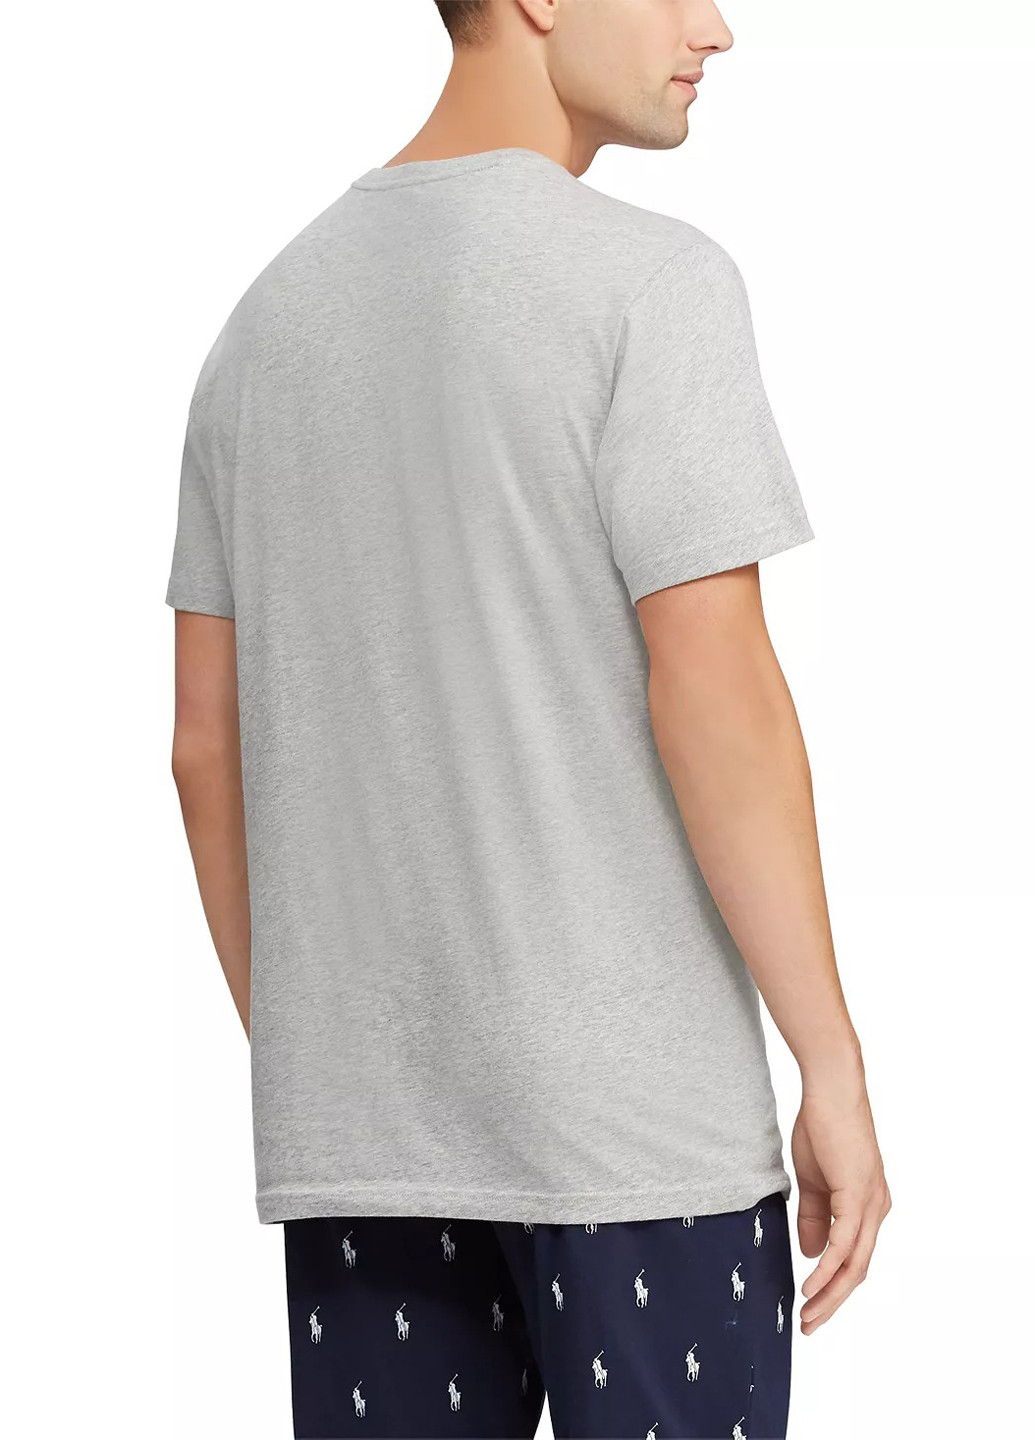 Светло-серая футболка с коротким рукавом Ralph Lauren